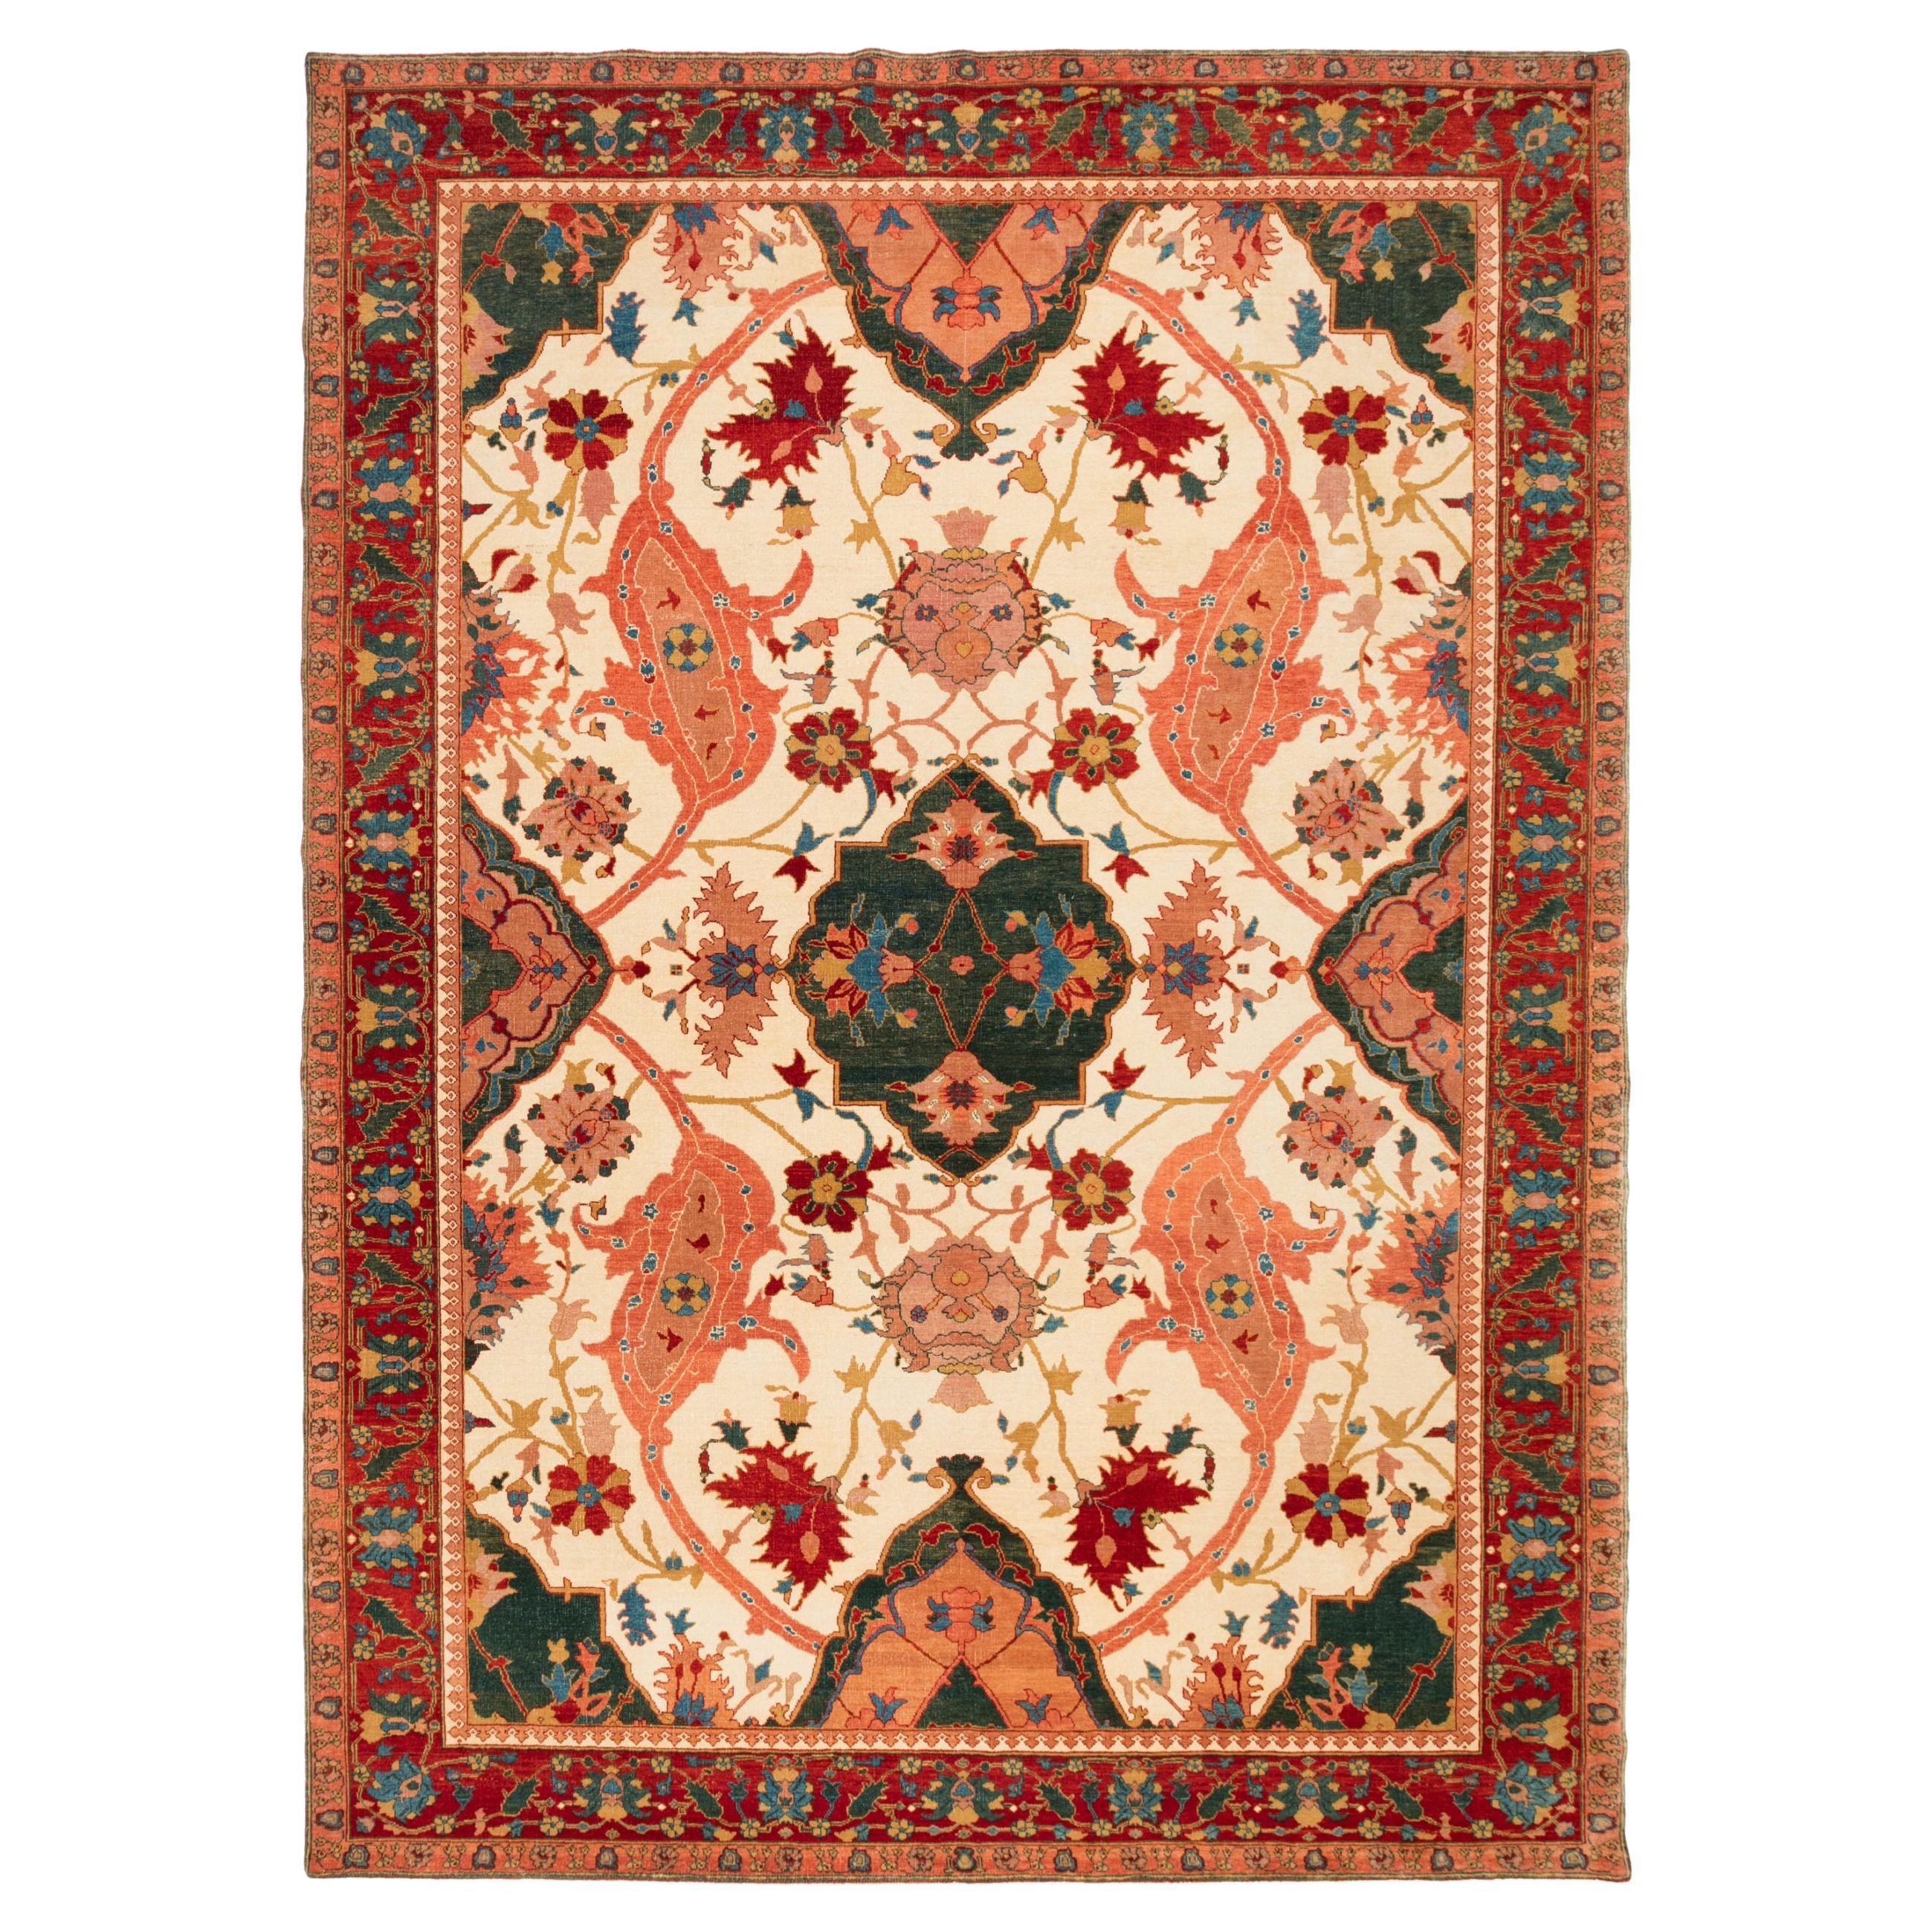 Ararat Rugs Garrus Bidjar Medallion Carpet 19th Century Revival Rug Natural Dyed